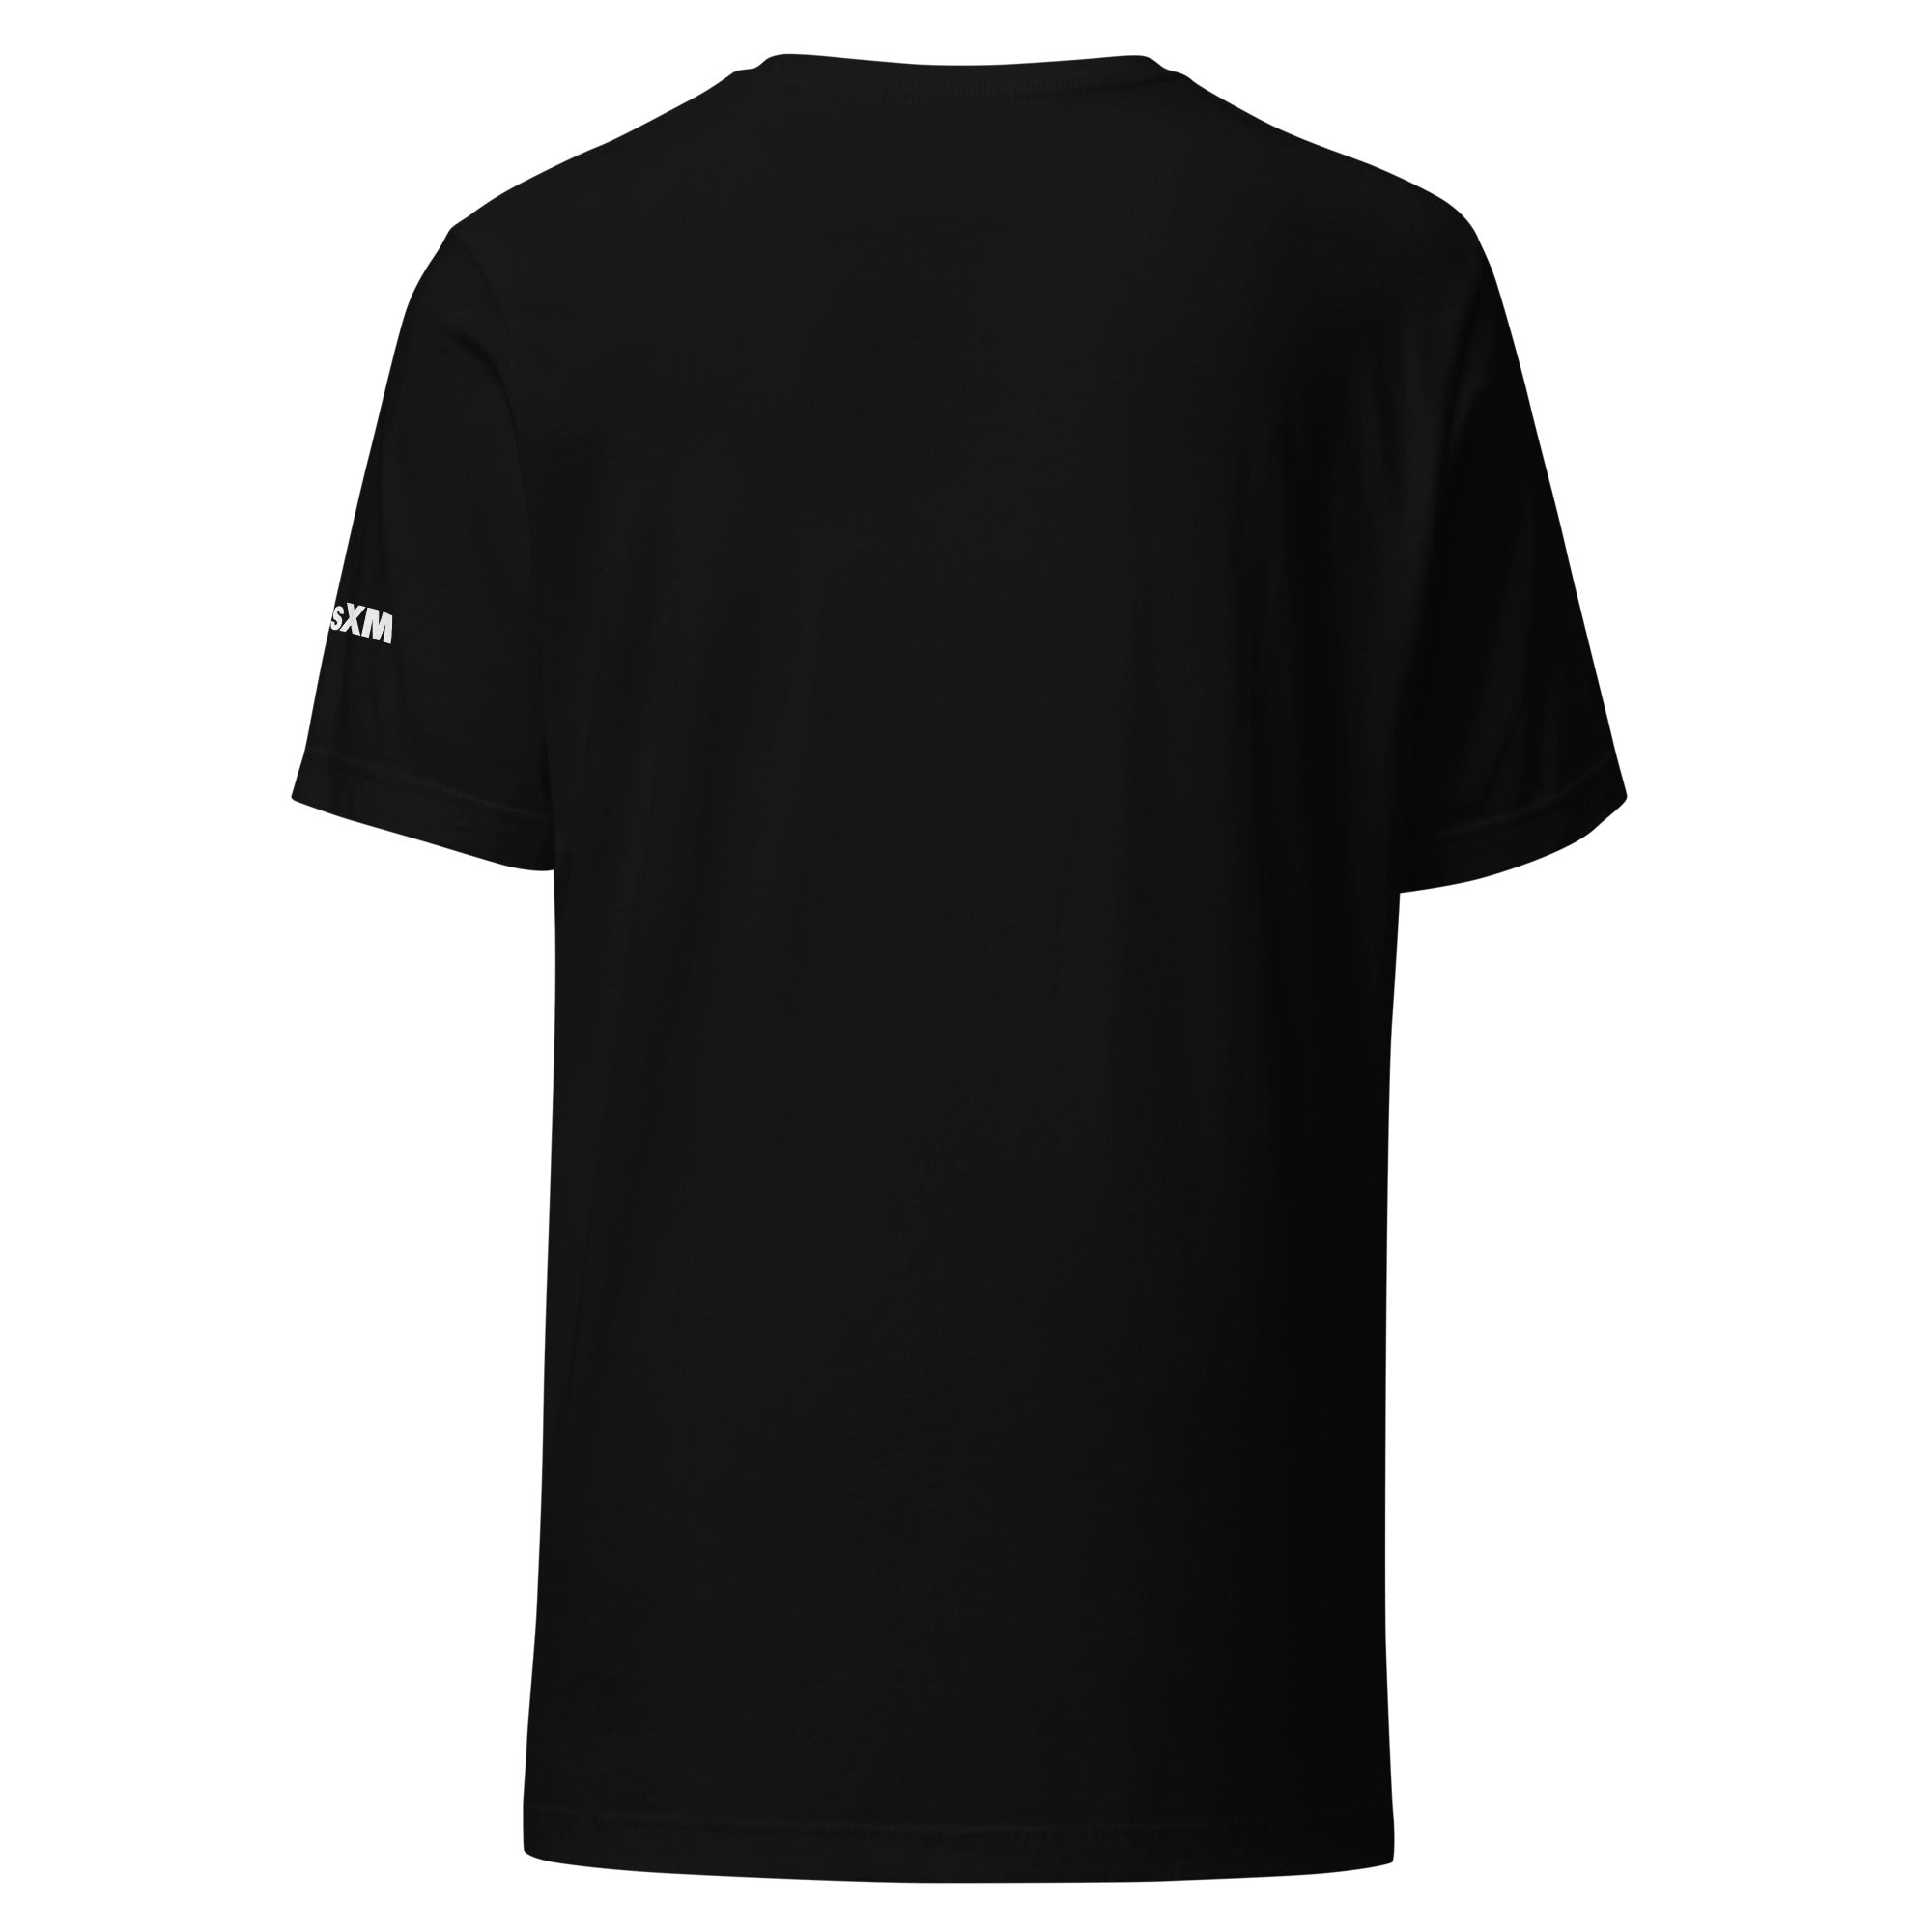 The Loft: T-shirt (Black)